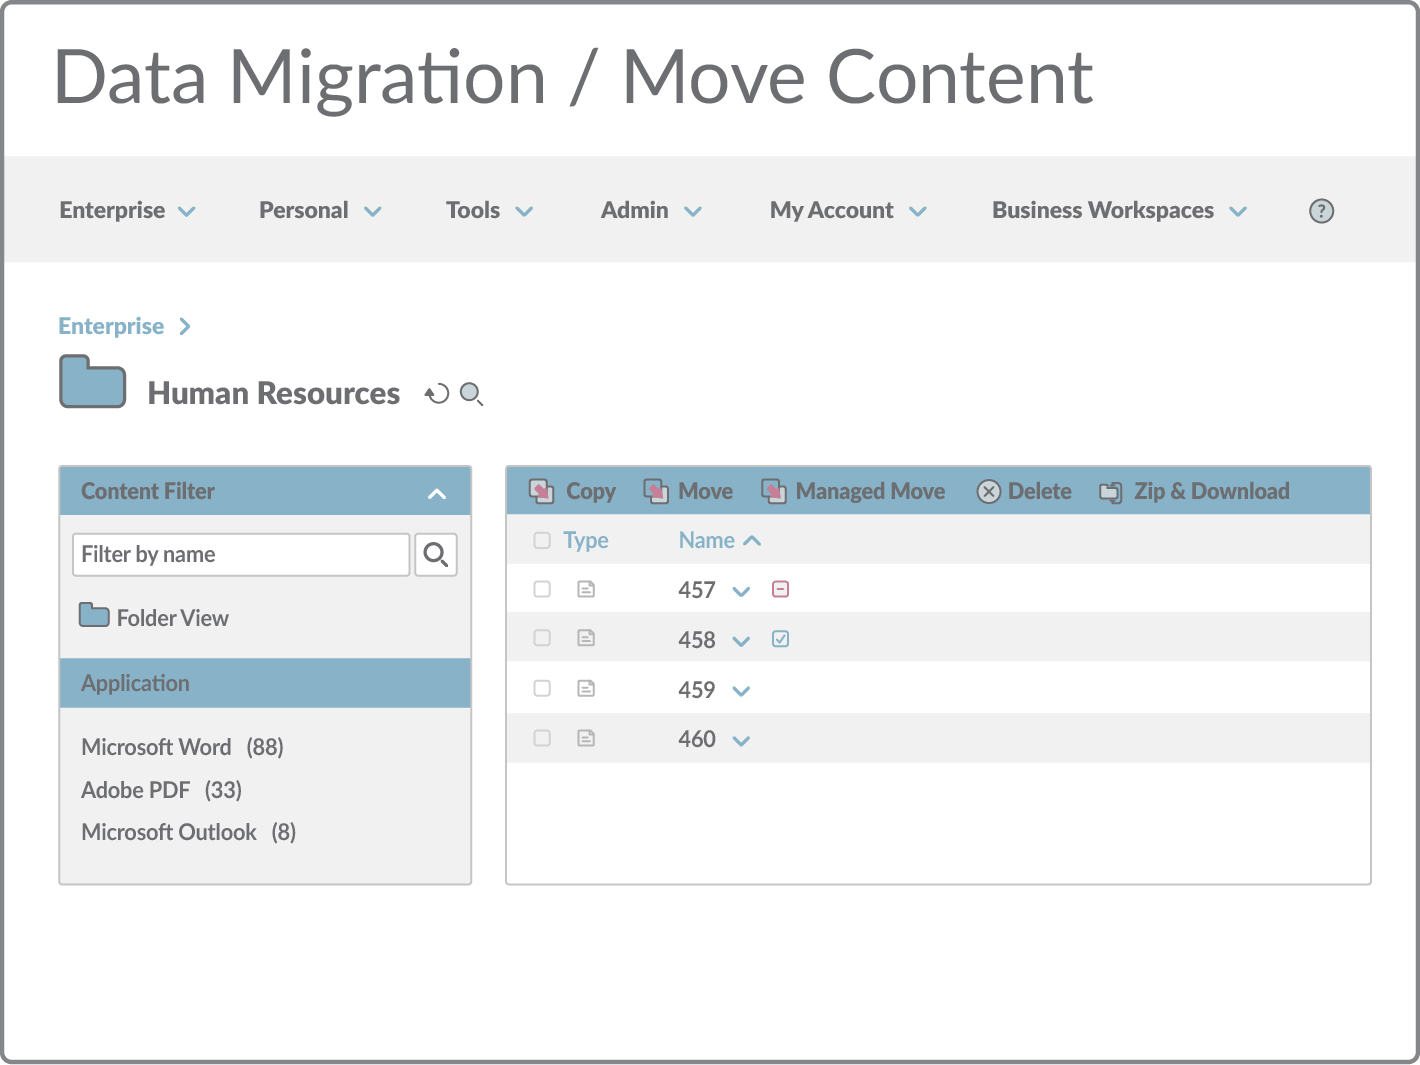 Data migration / move content